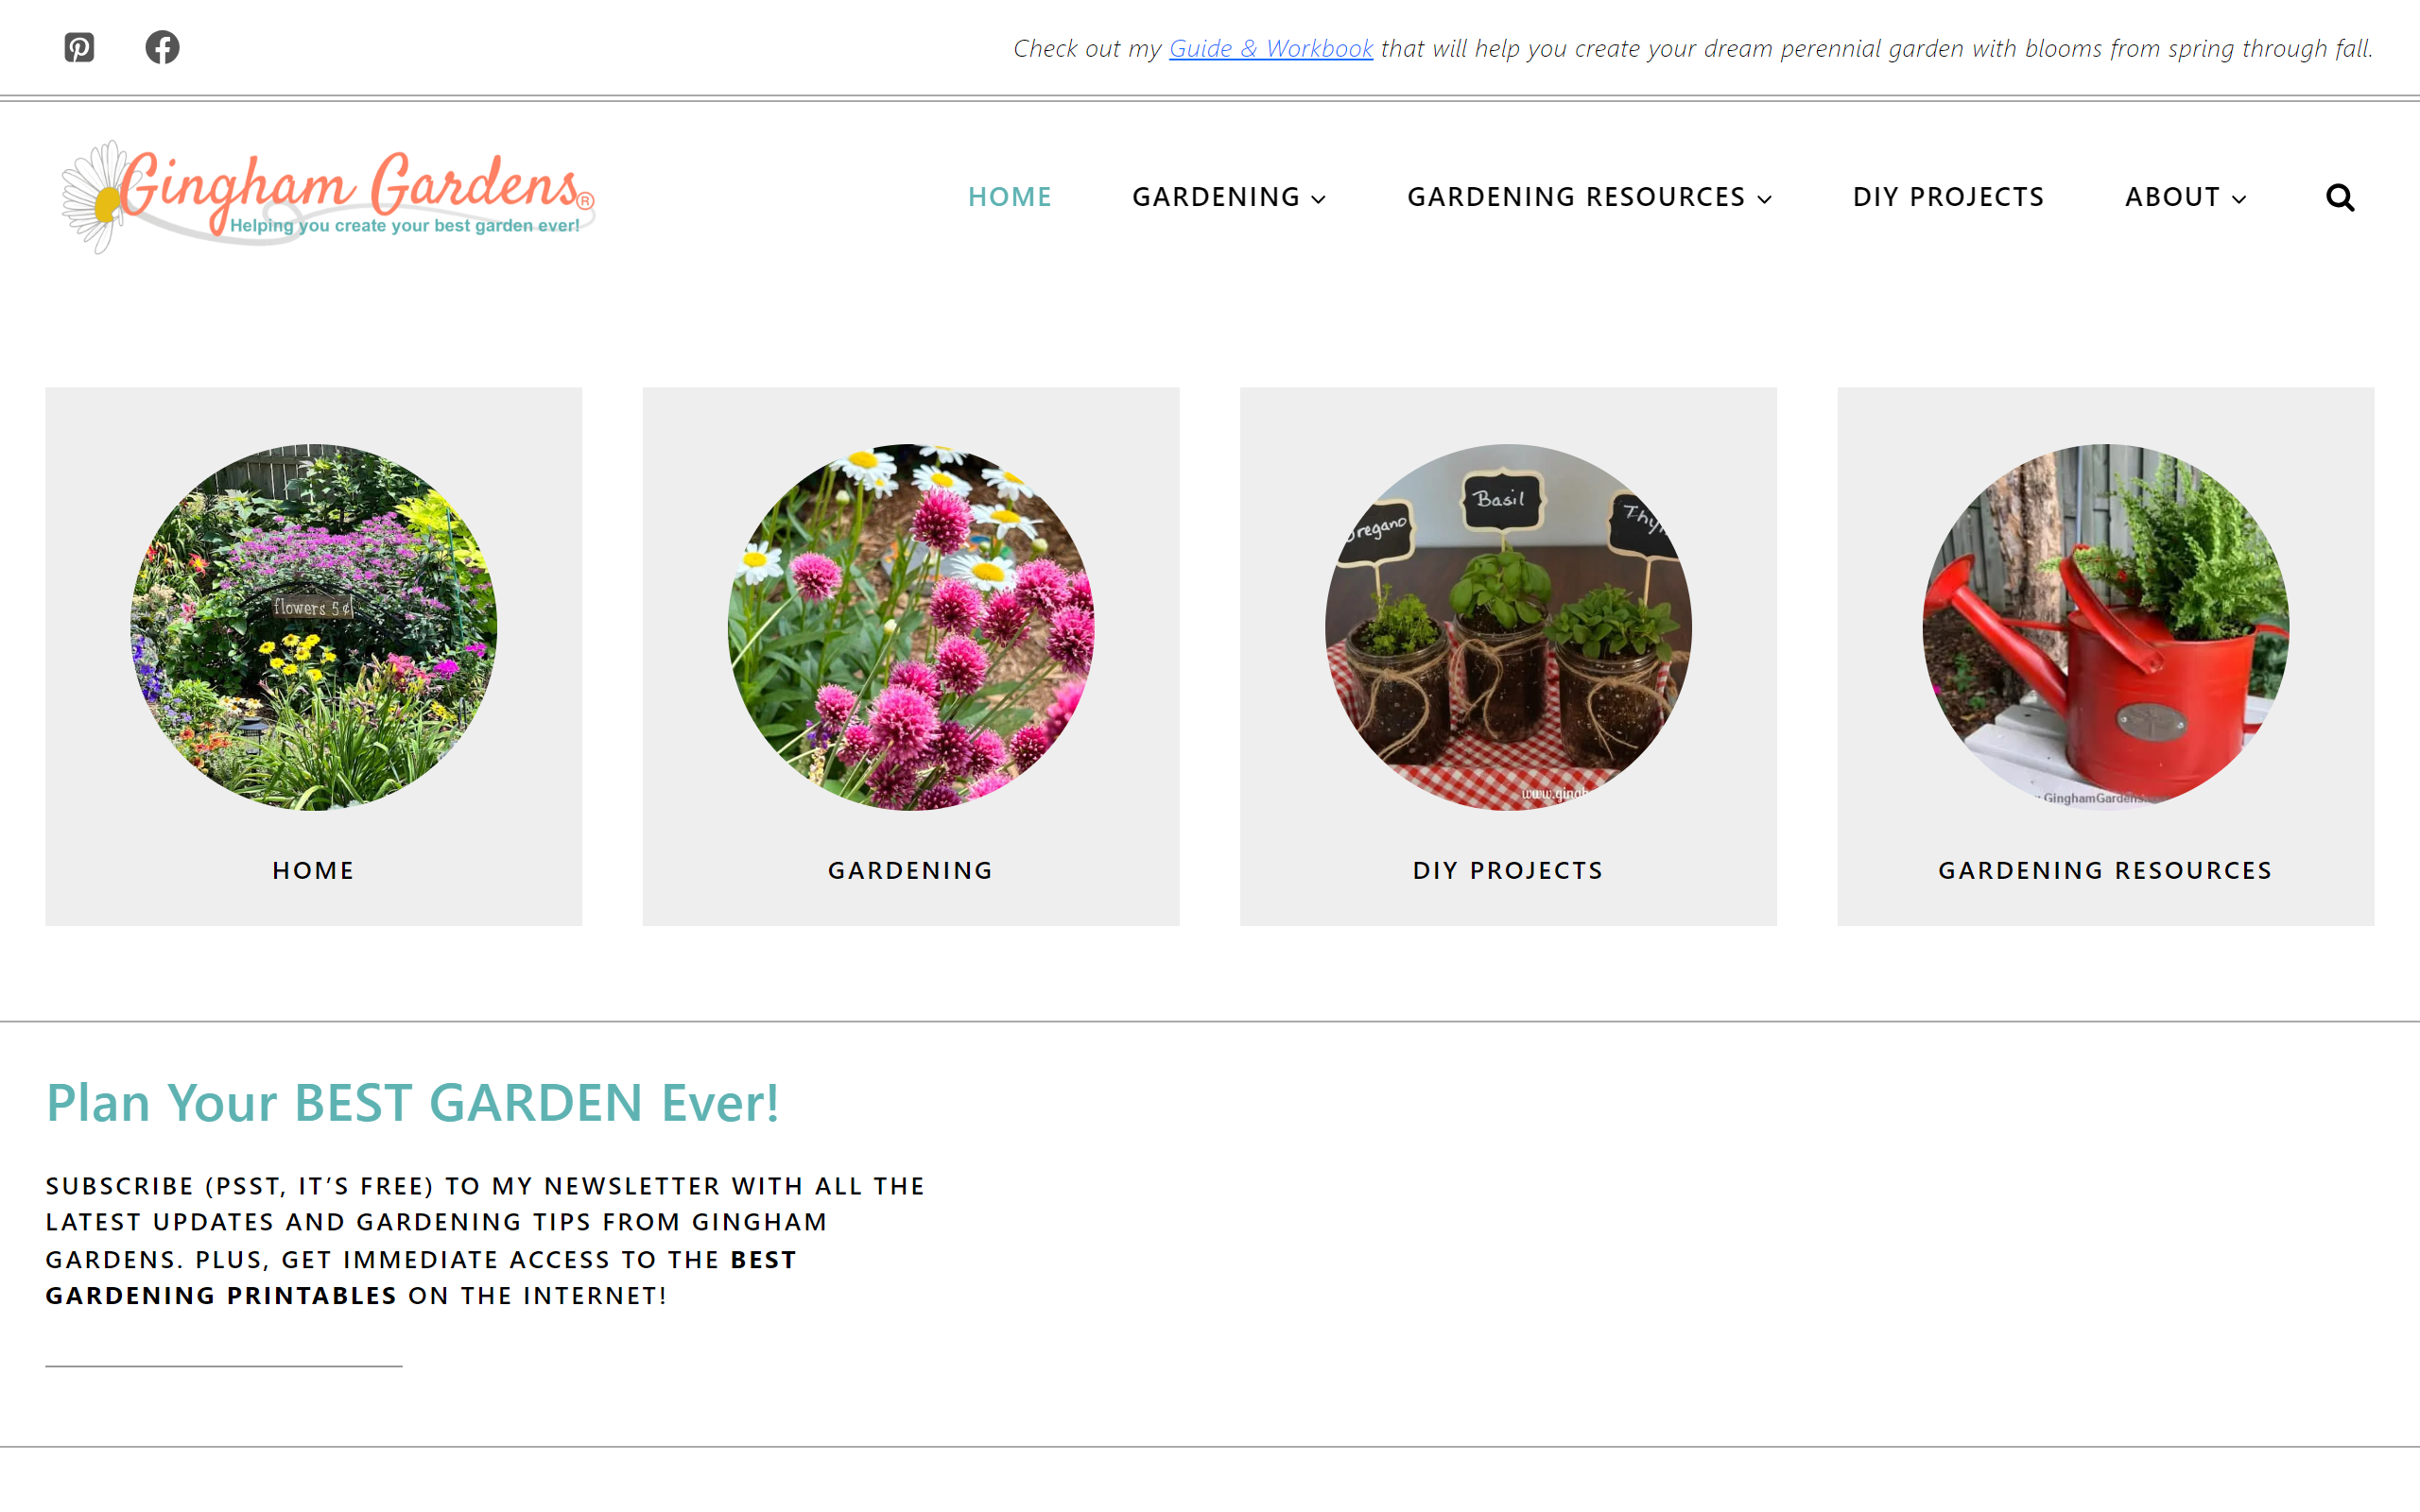 Gingham Gardens gardening blog